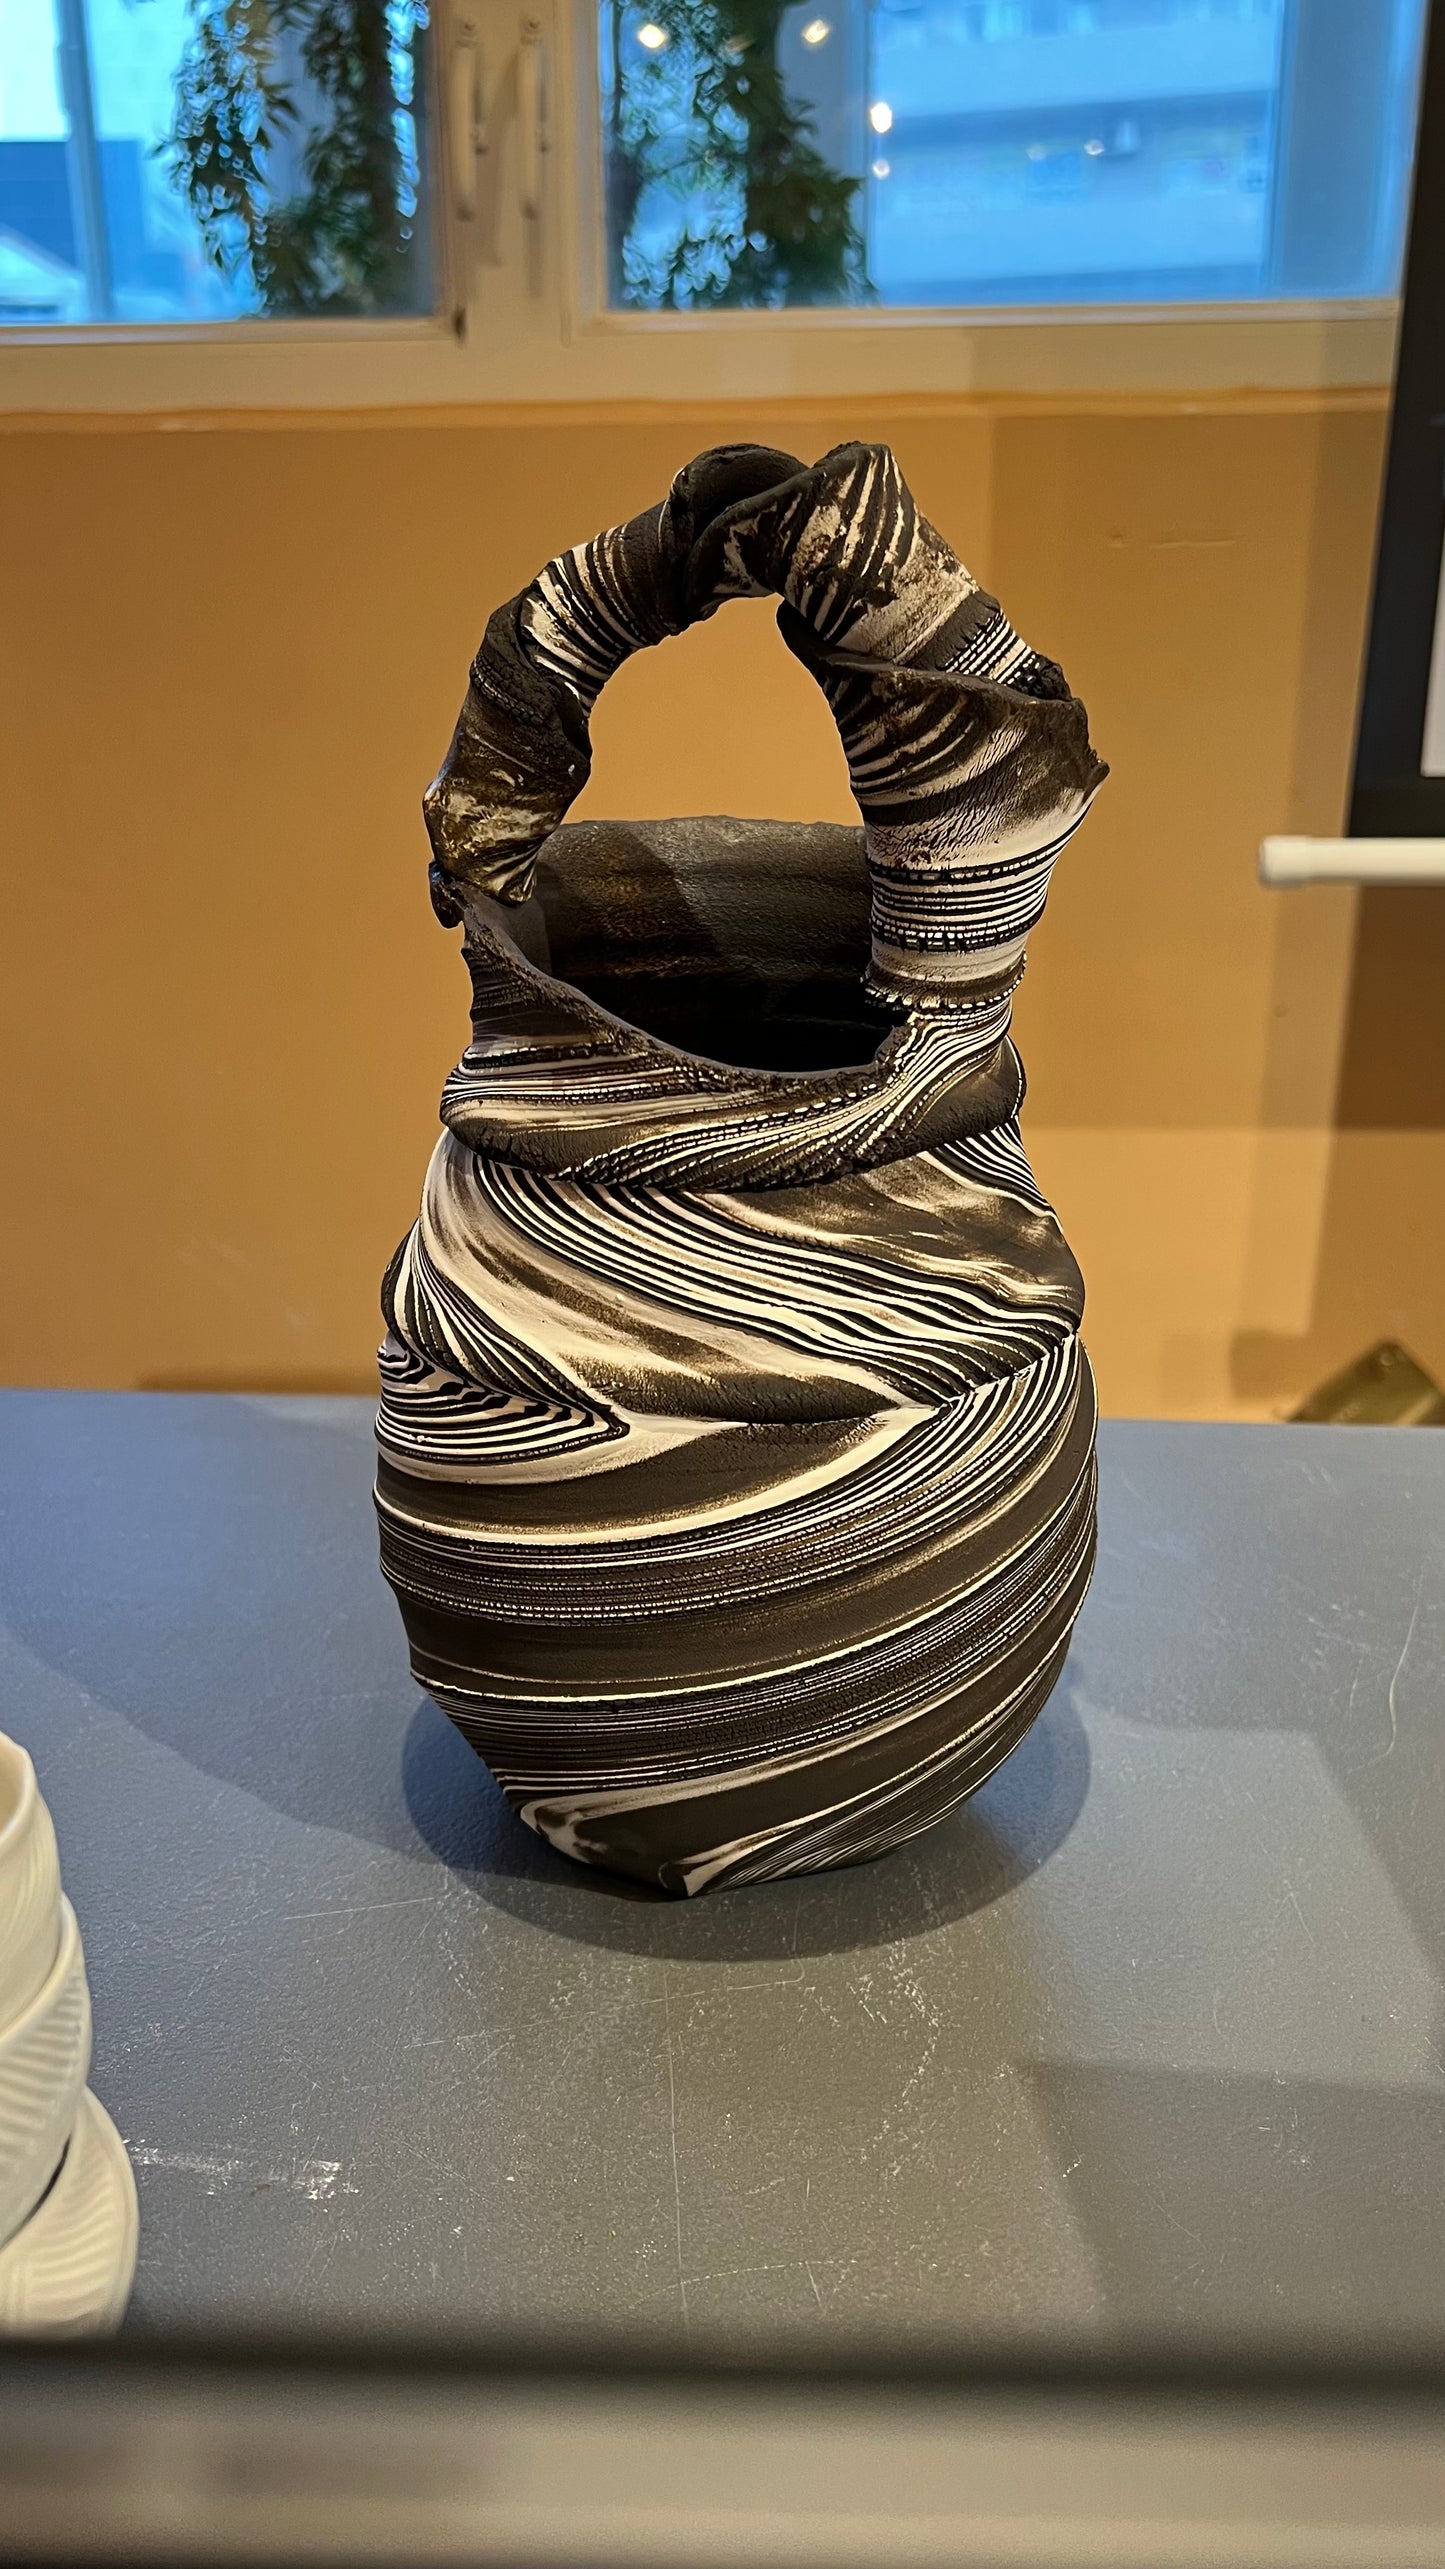 17. Spiral Vase with Handle I